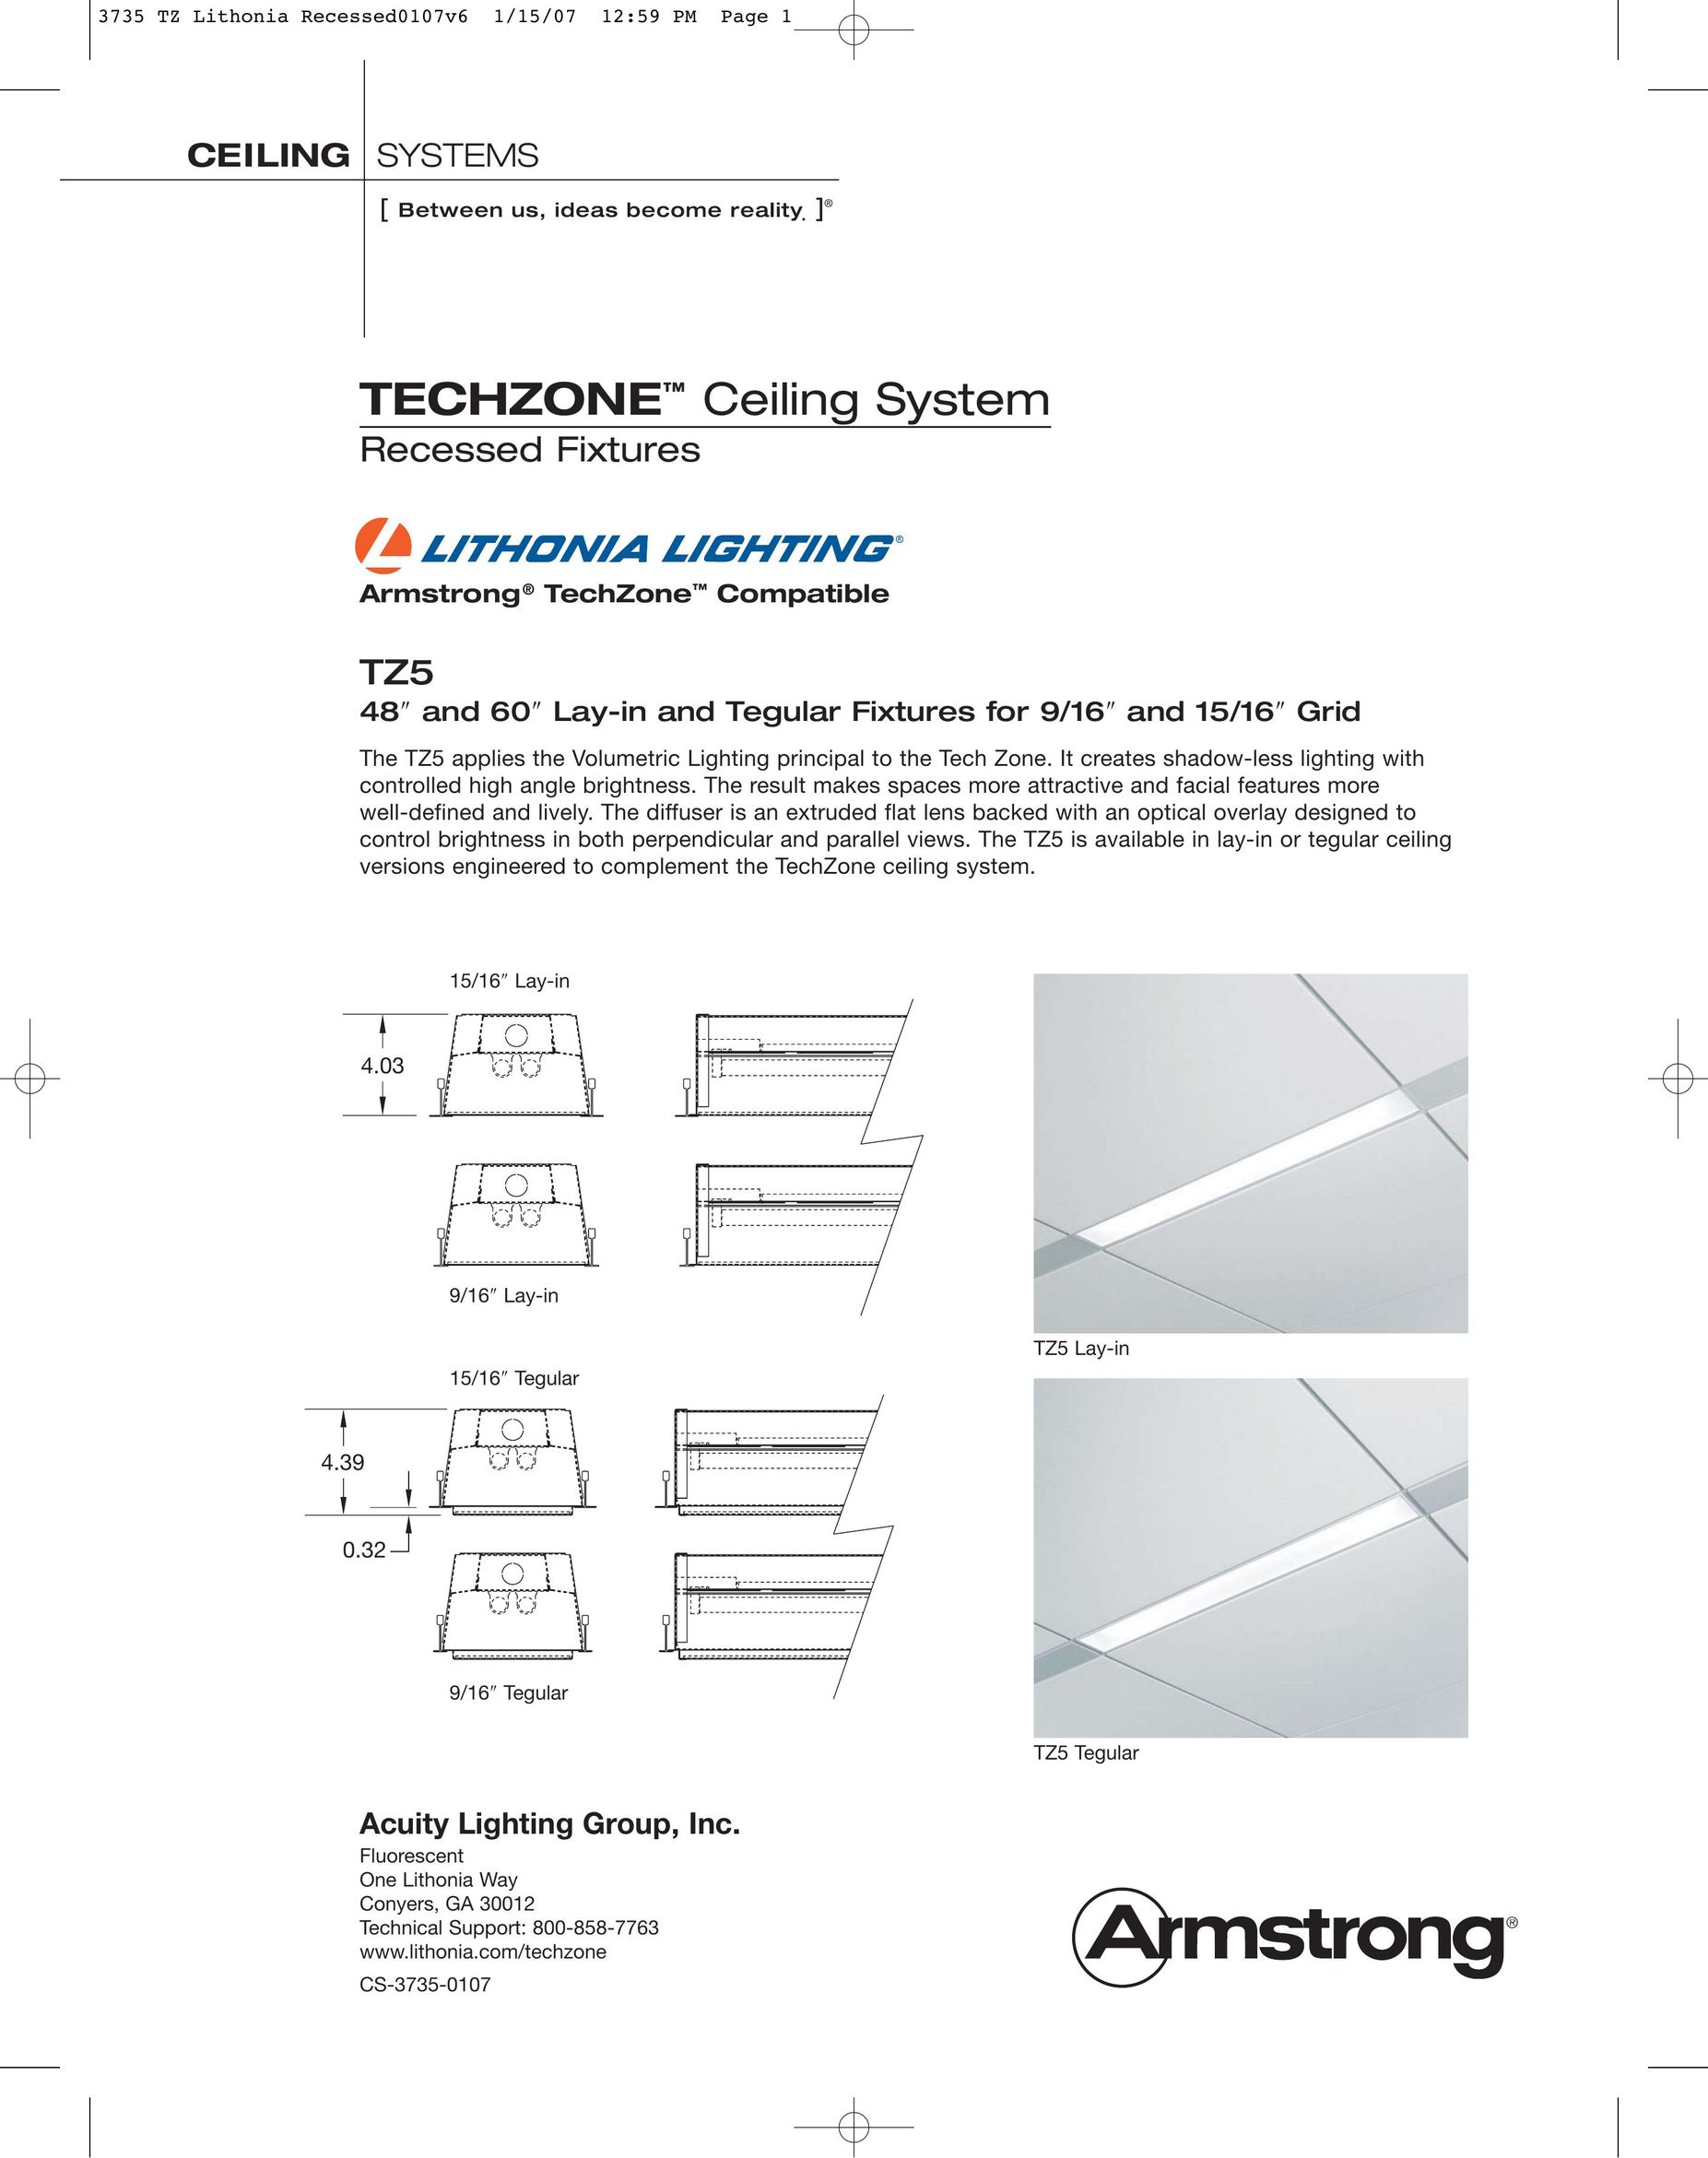 Armstrong World Industries TZ5 Indoor Furnishings User Manual